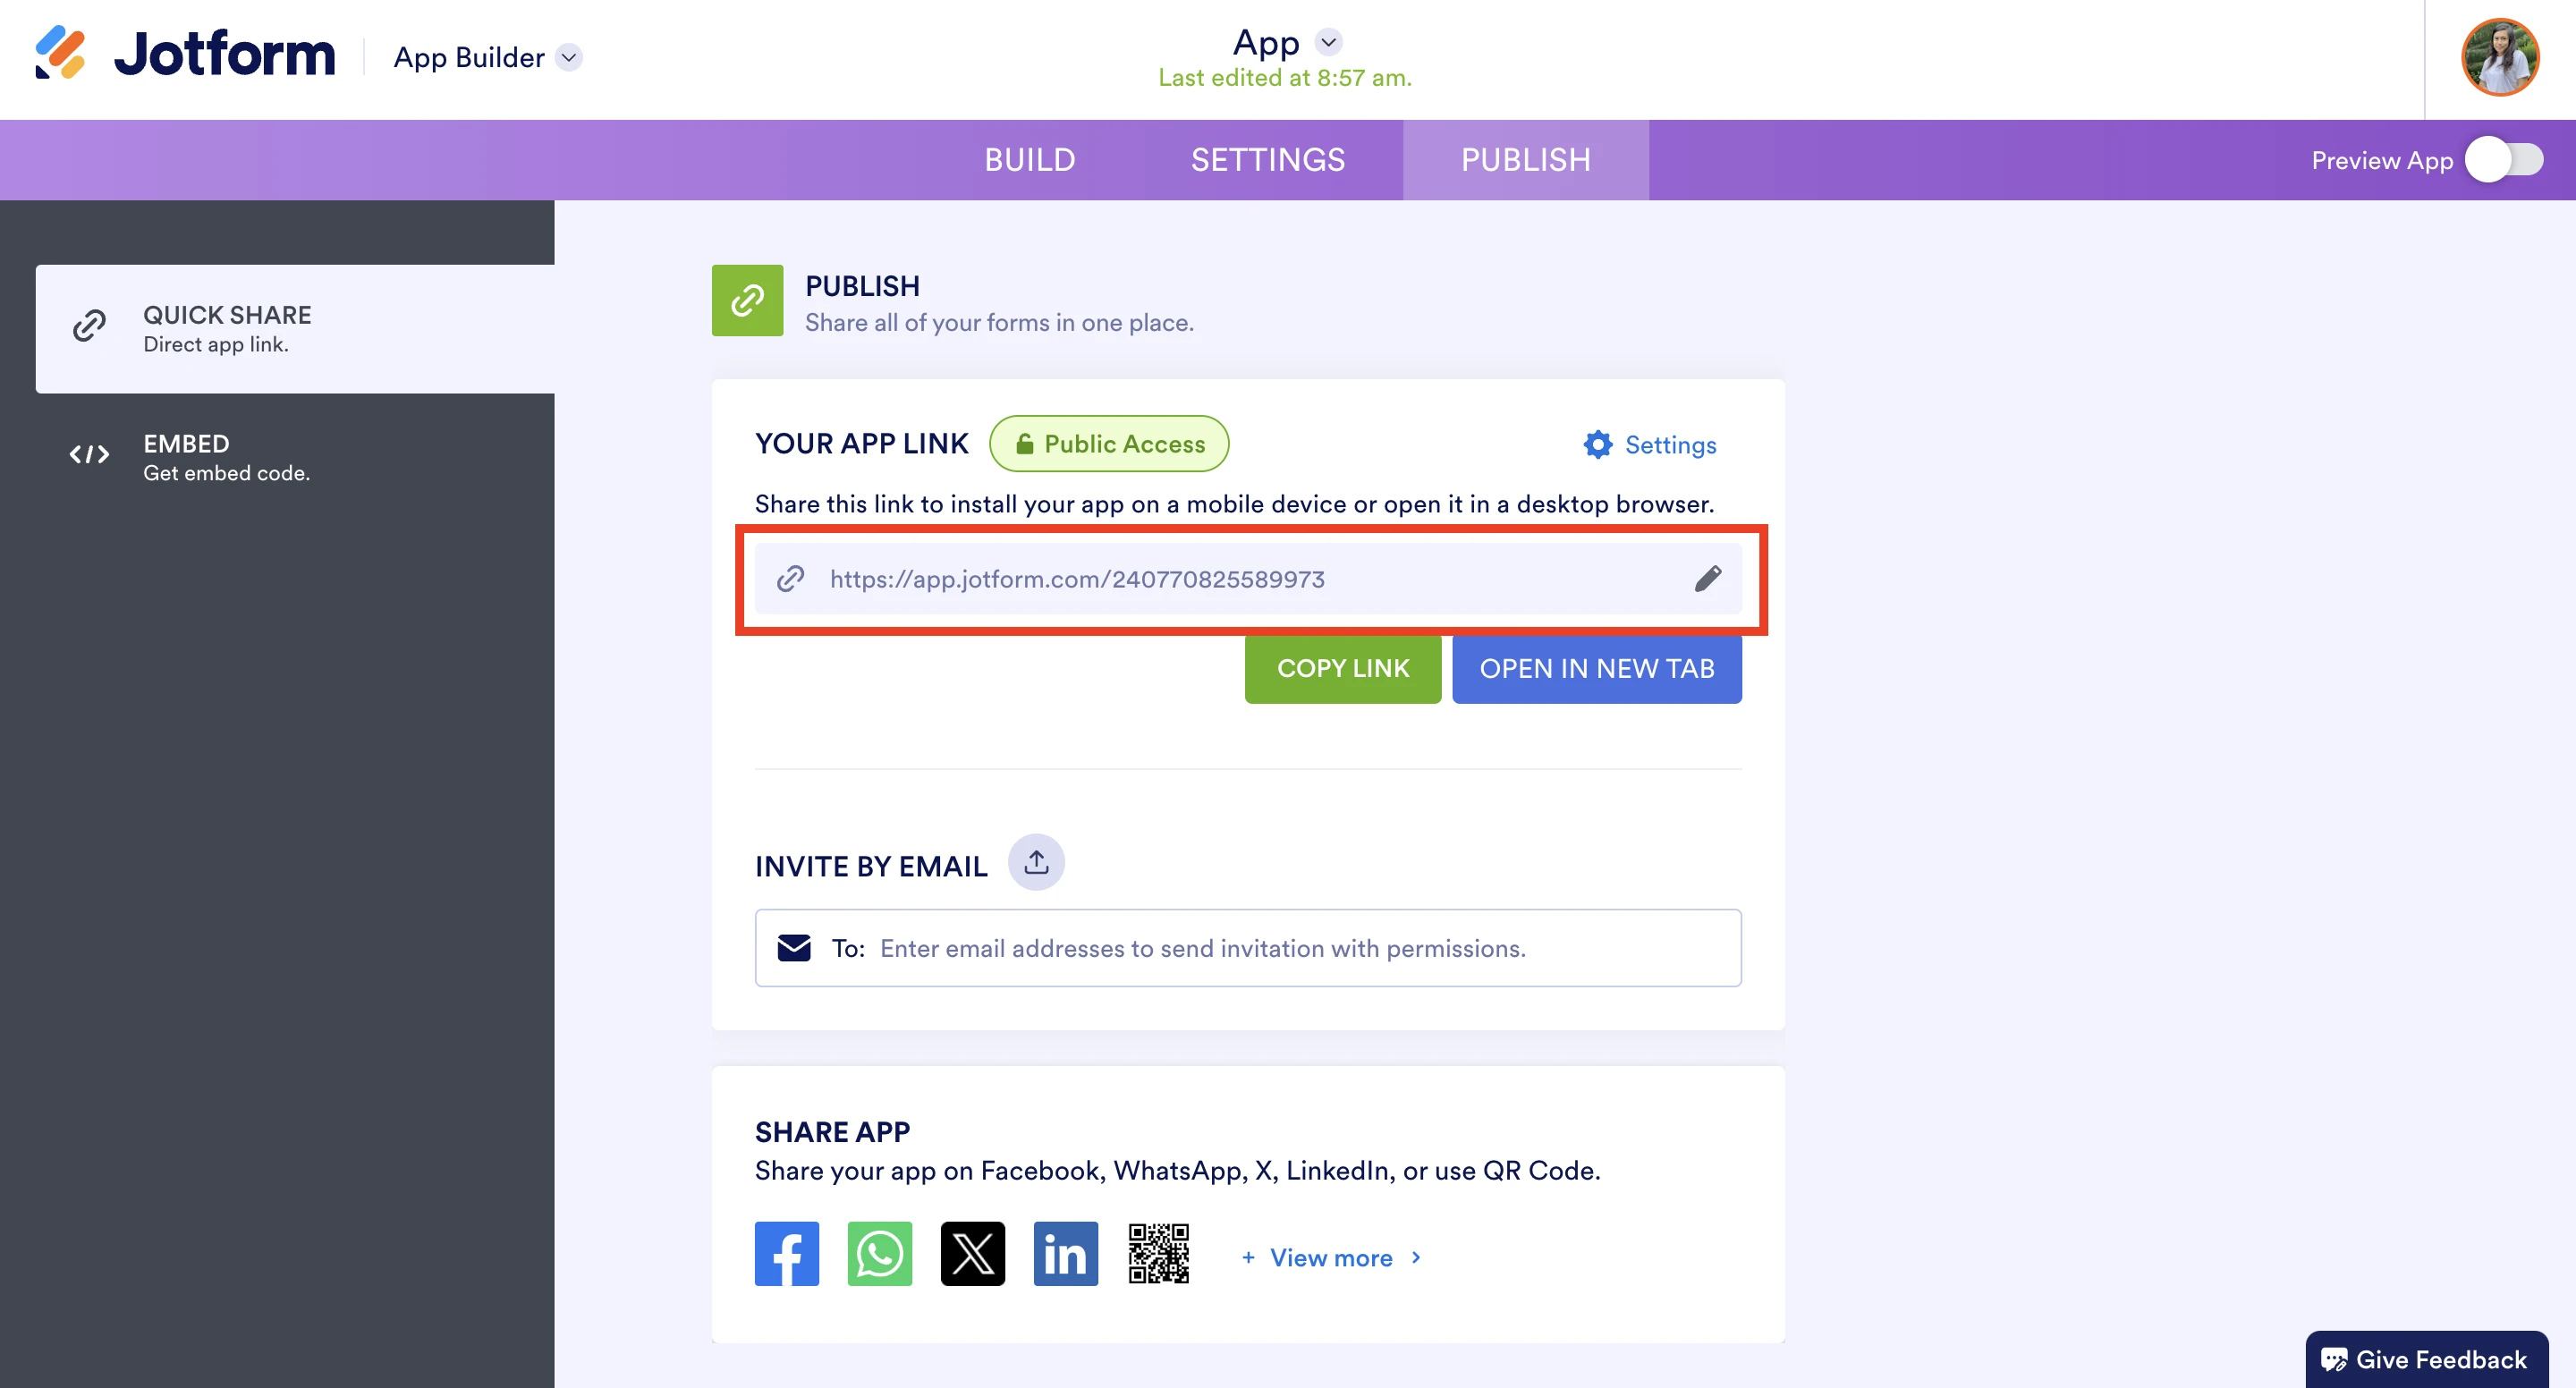 Jotform App:Publish on Google Play Store Image 1 Screenshot 20